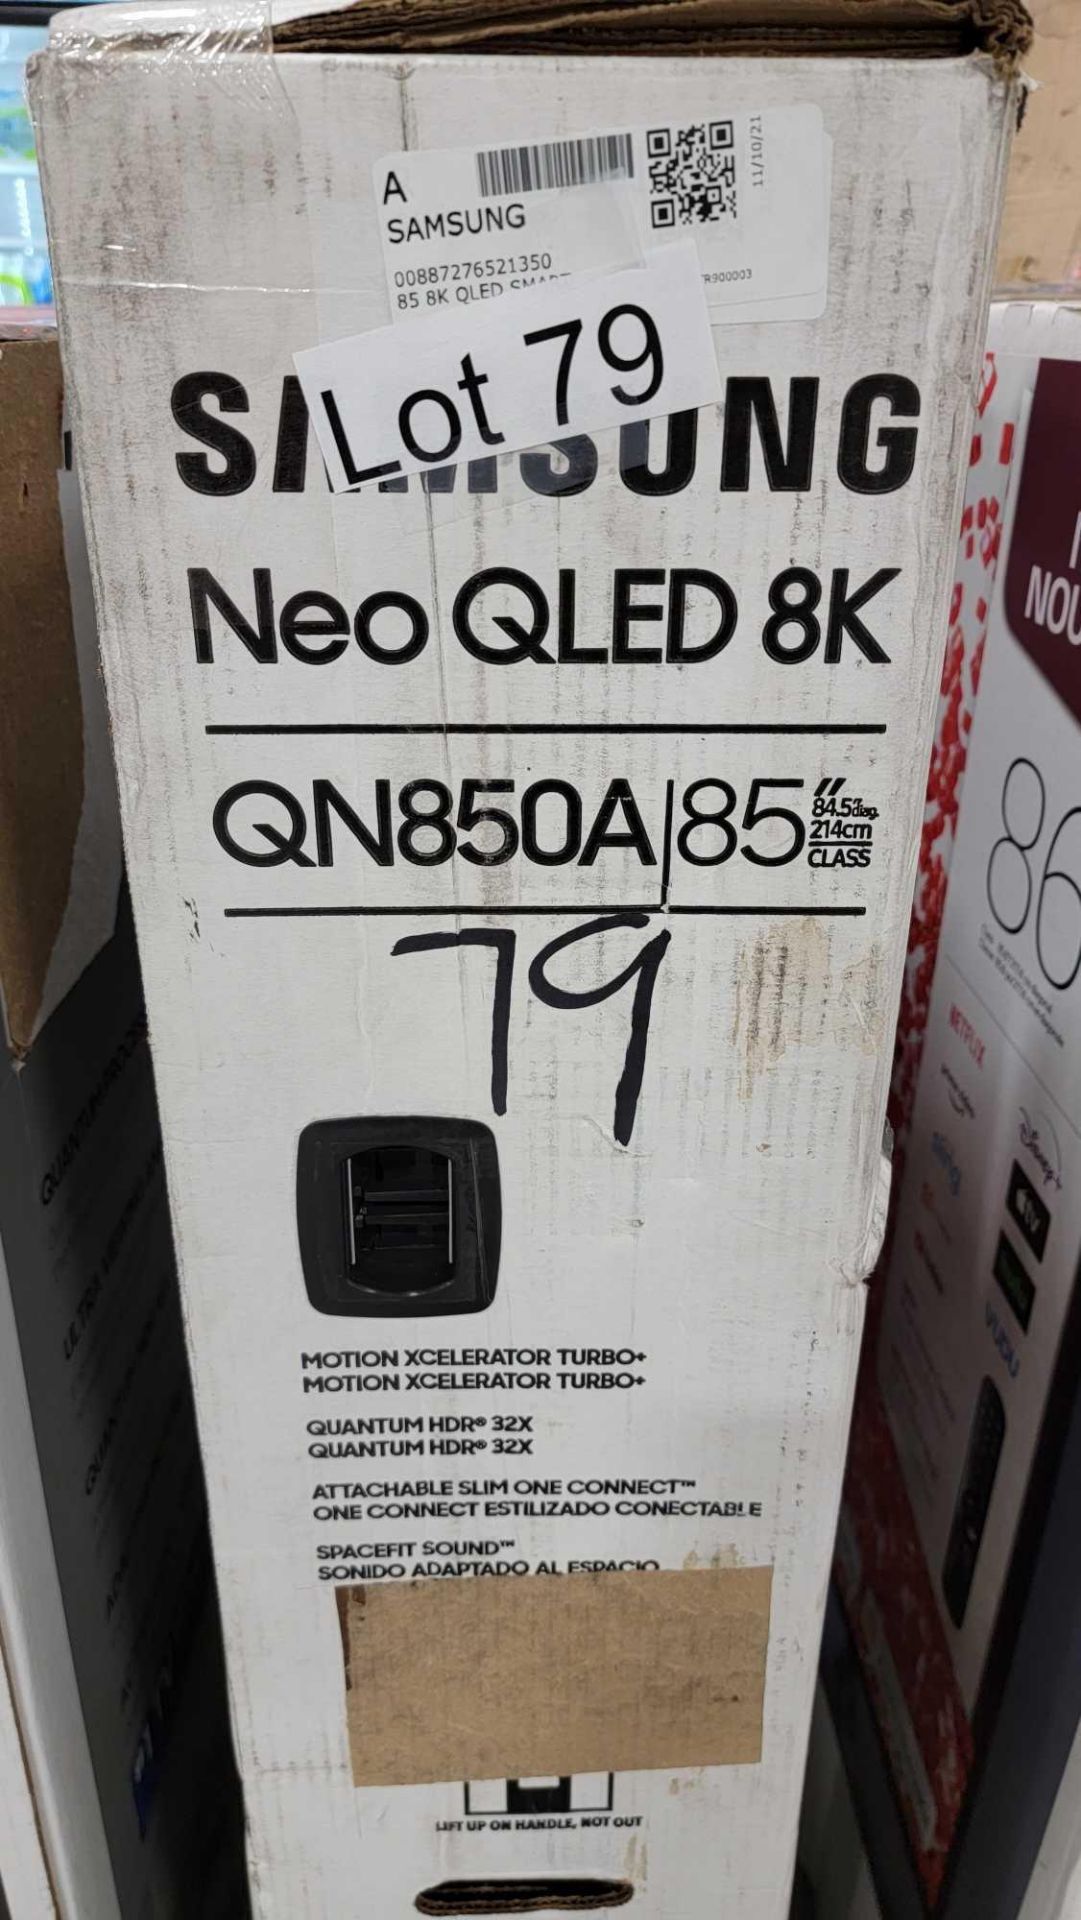 Samsung Neo QLED 8K (QN850A) 85" TV